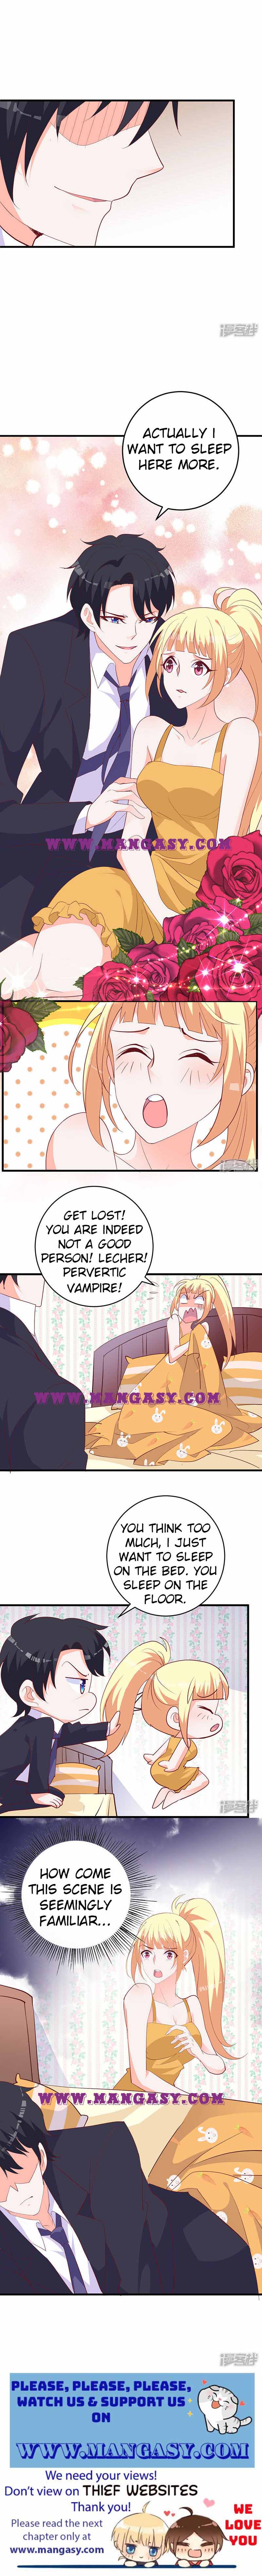 Charming Vampire Wants Me Chapter 21 - MyToon.net